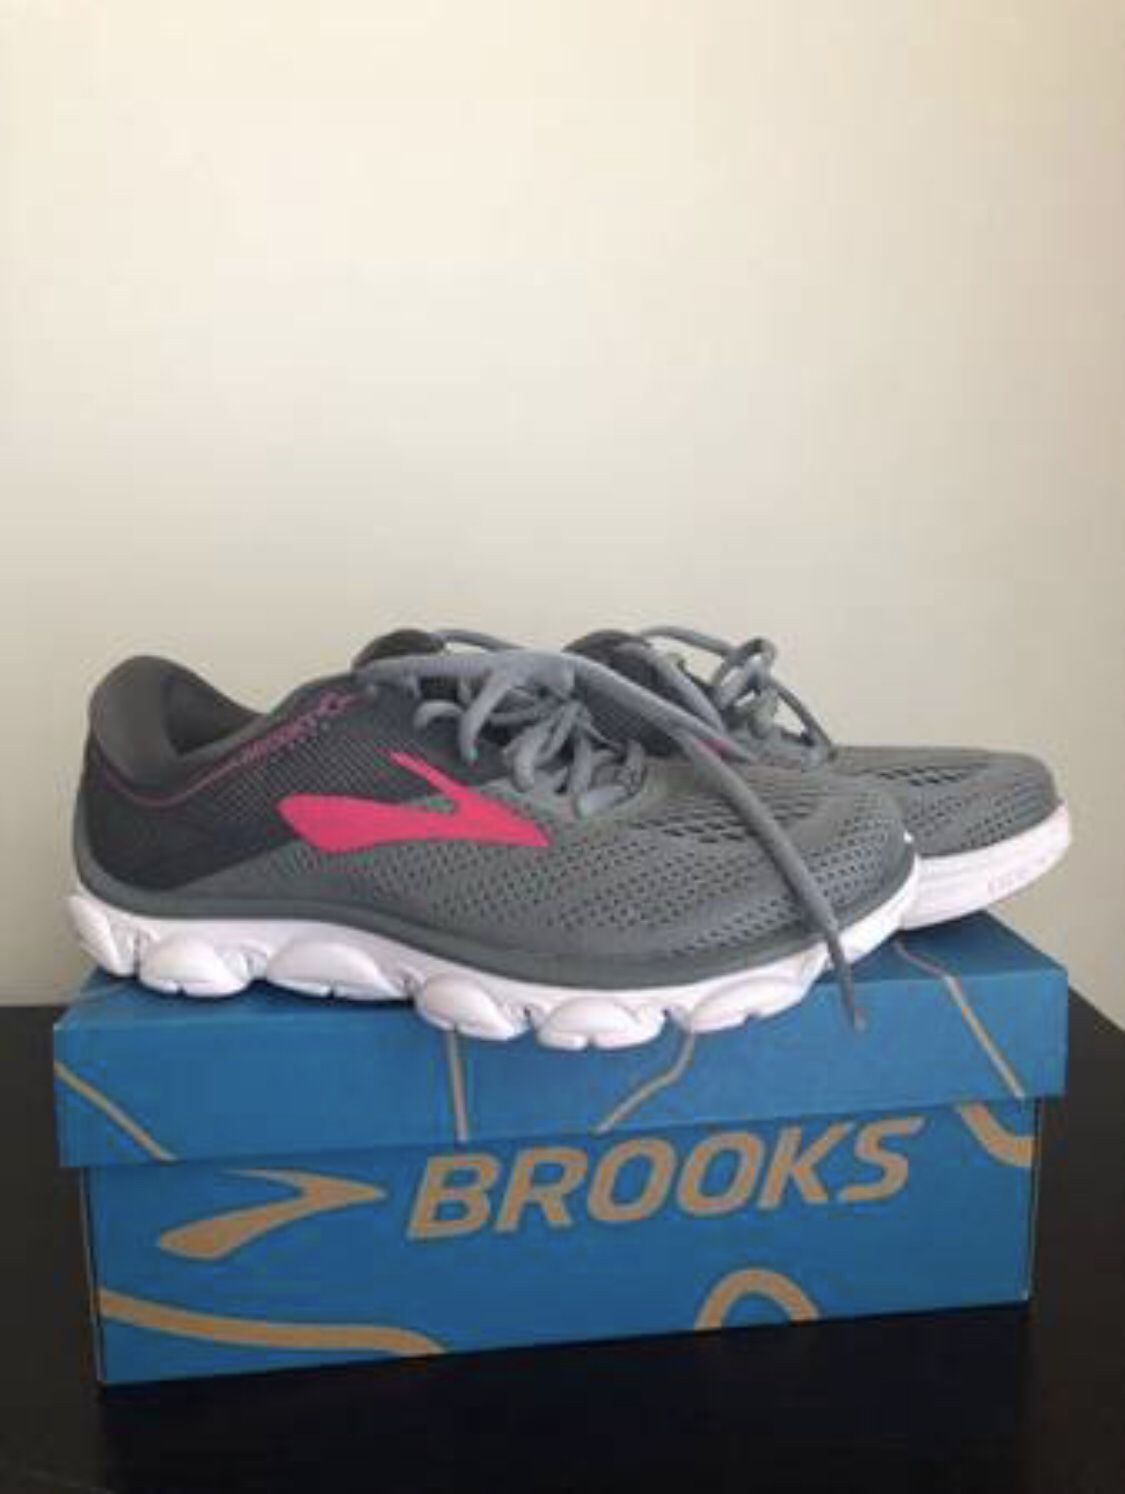 BROOKS Running Shoes BRAND NEW - Women’s Size 6